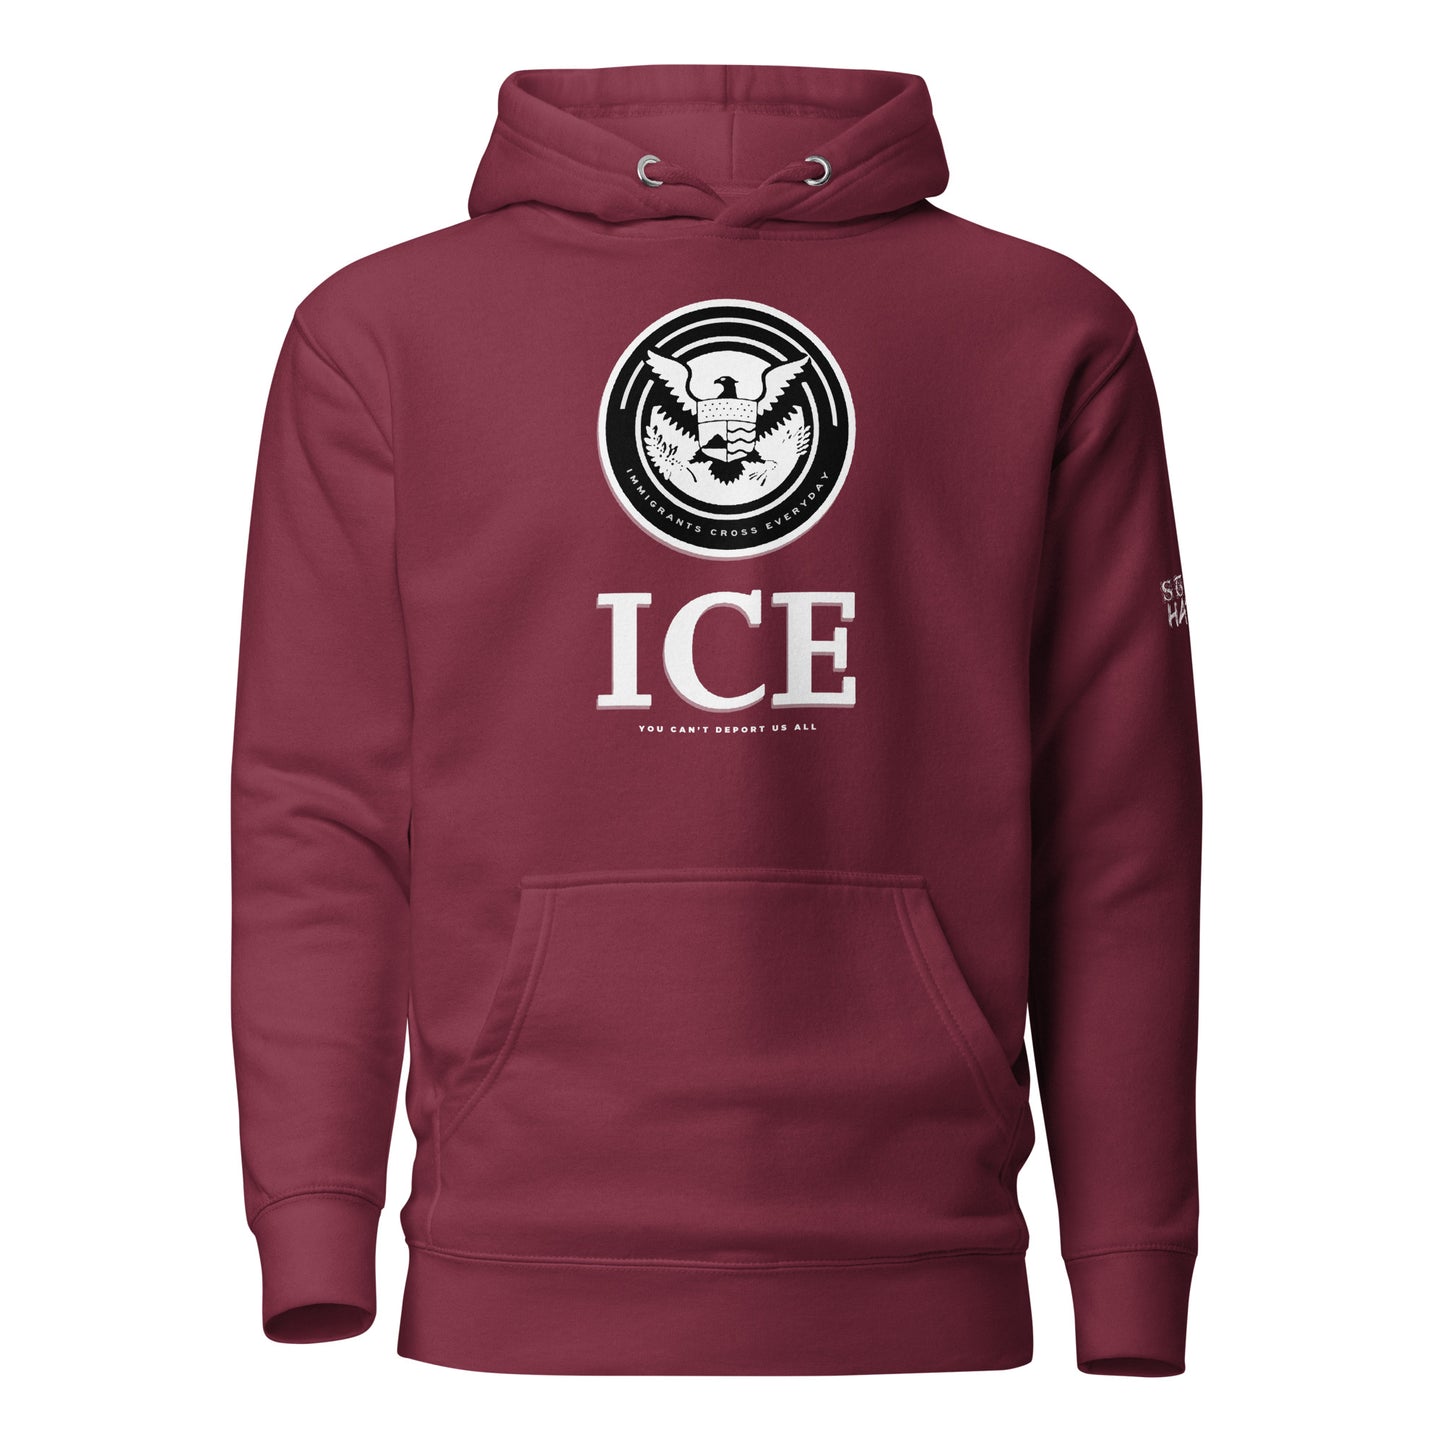 ICE V1 - Unisex Hoodie